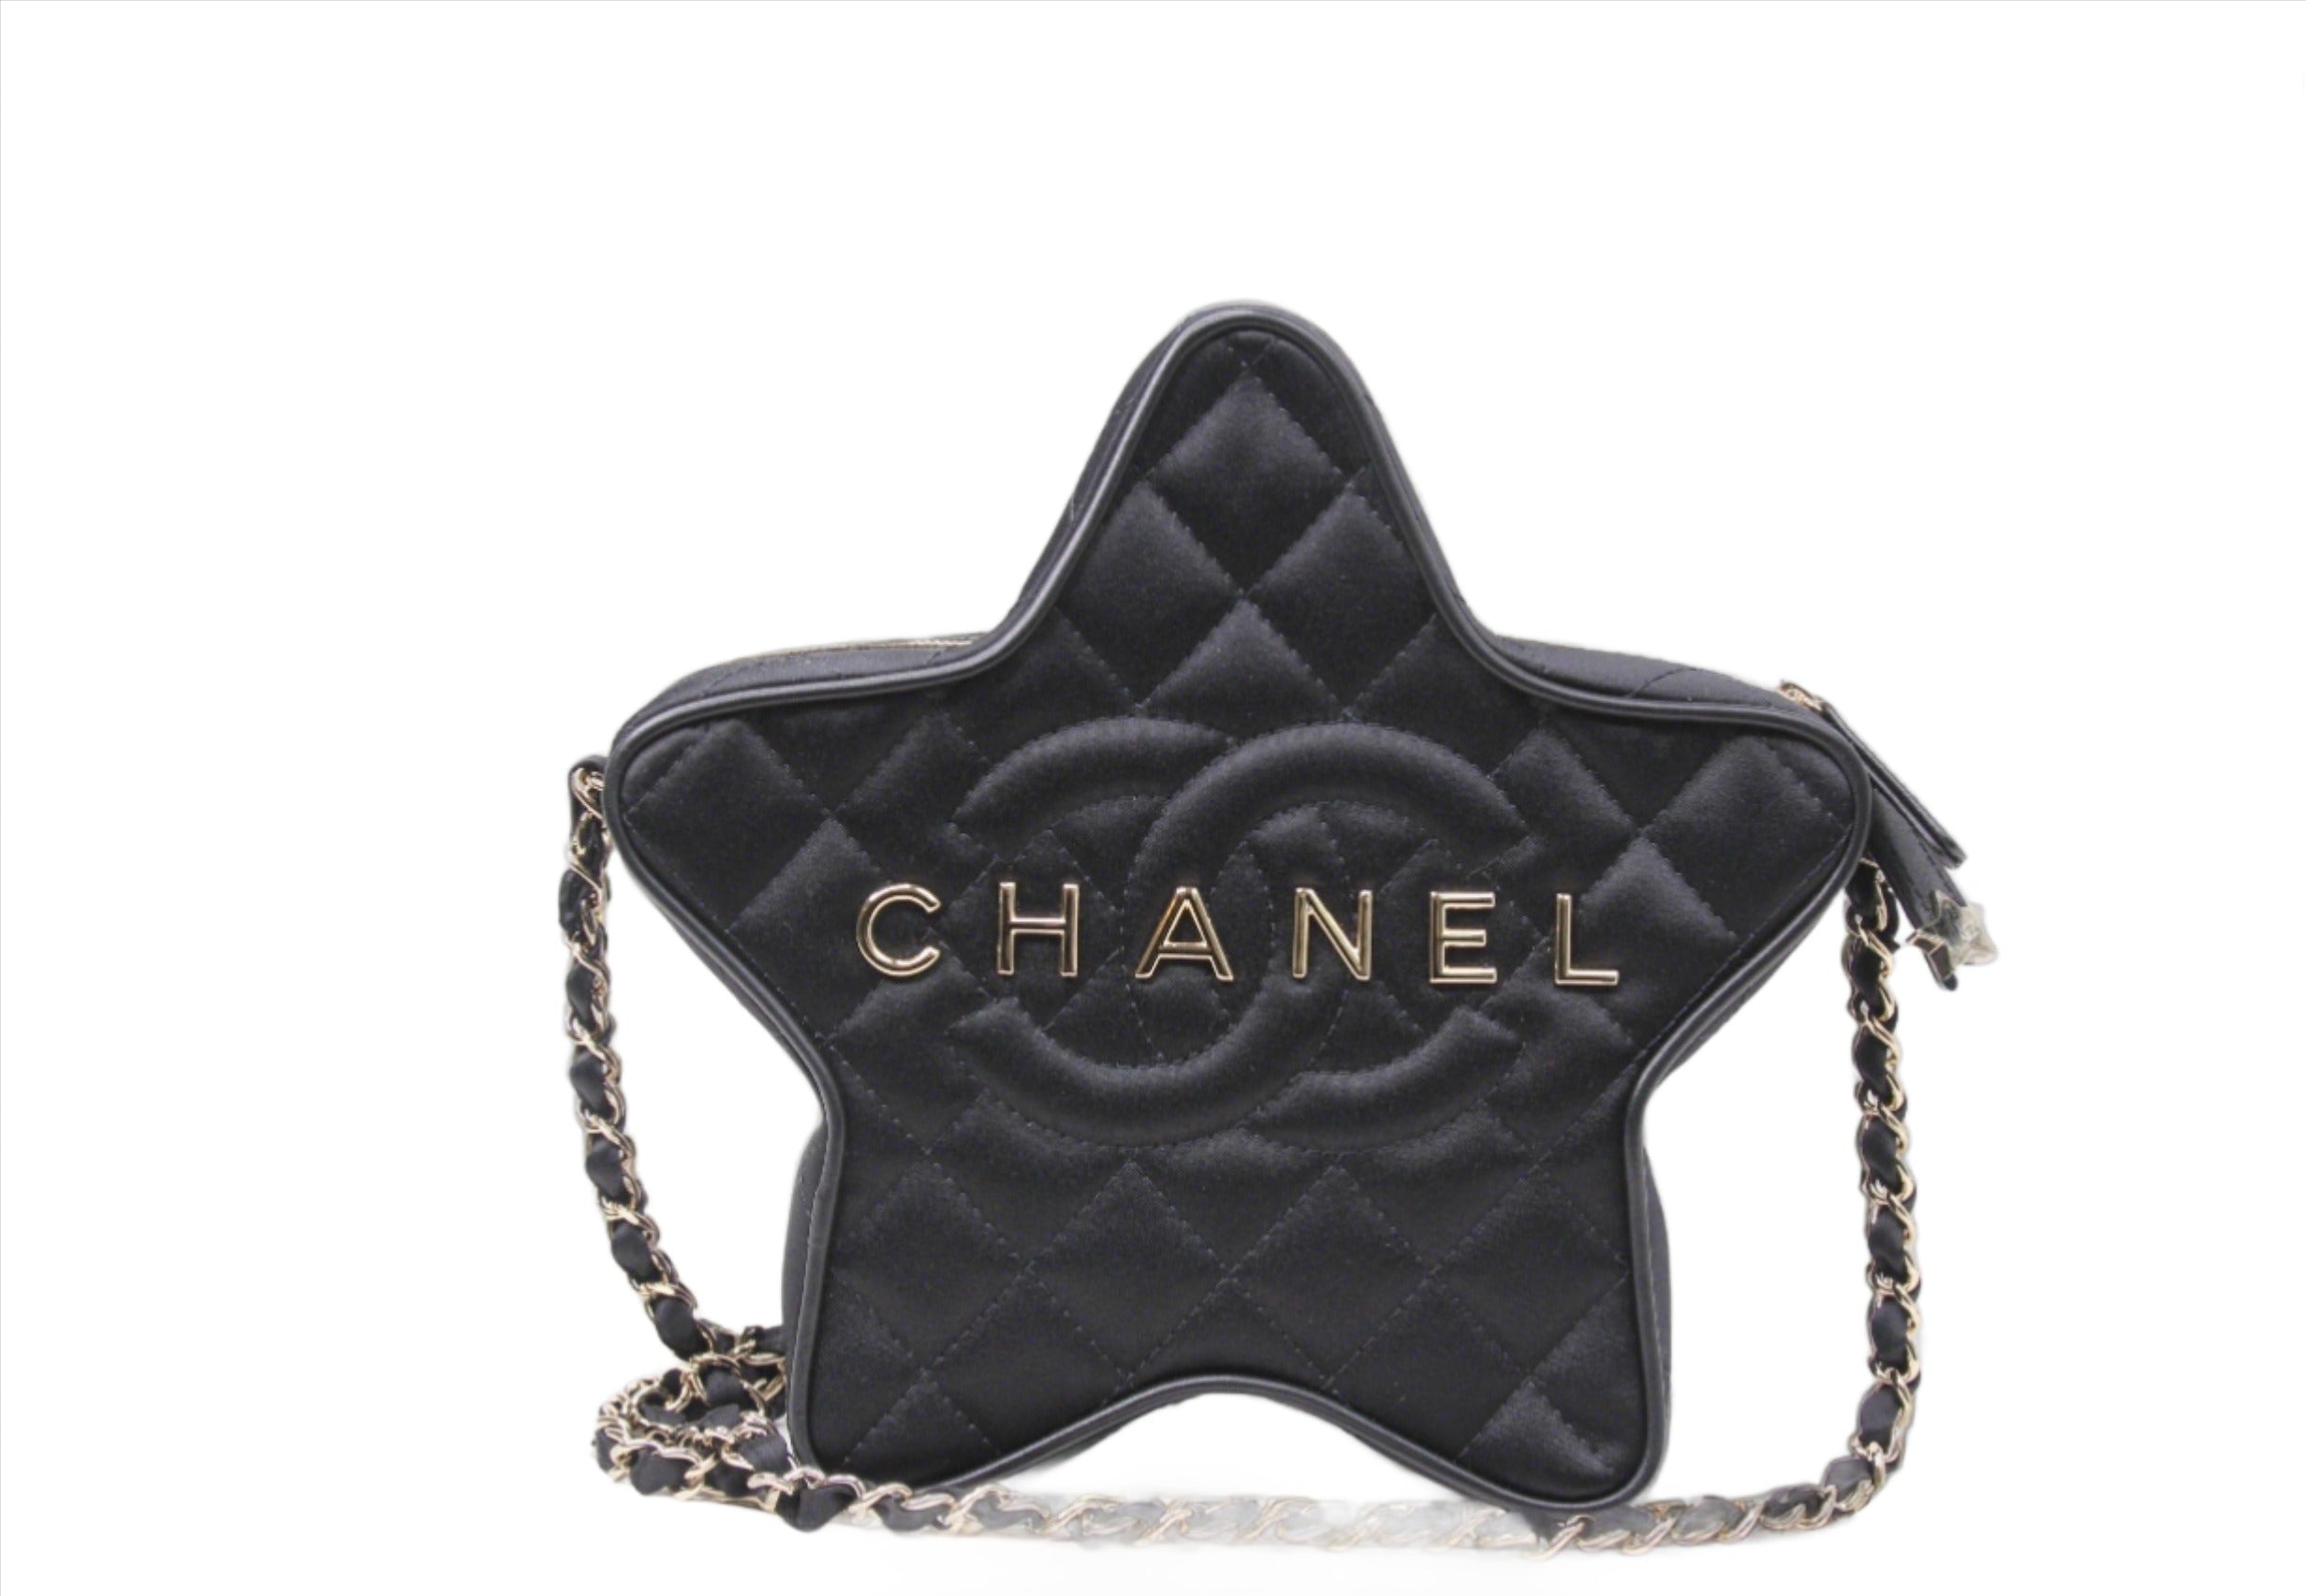 Front of Chanel star handbag in finished in black satin